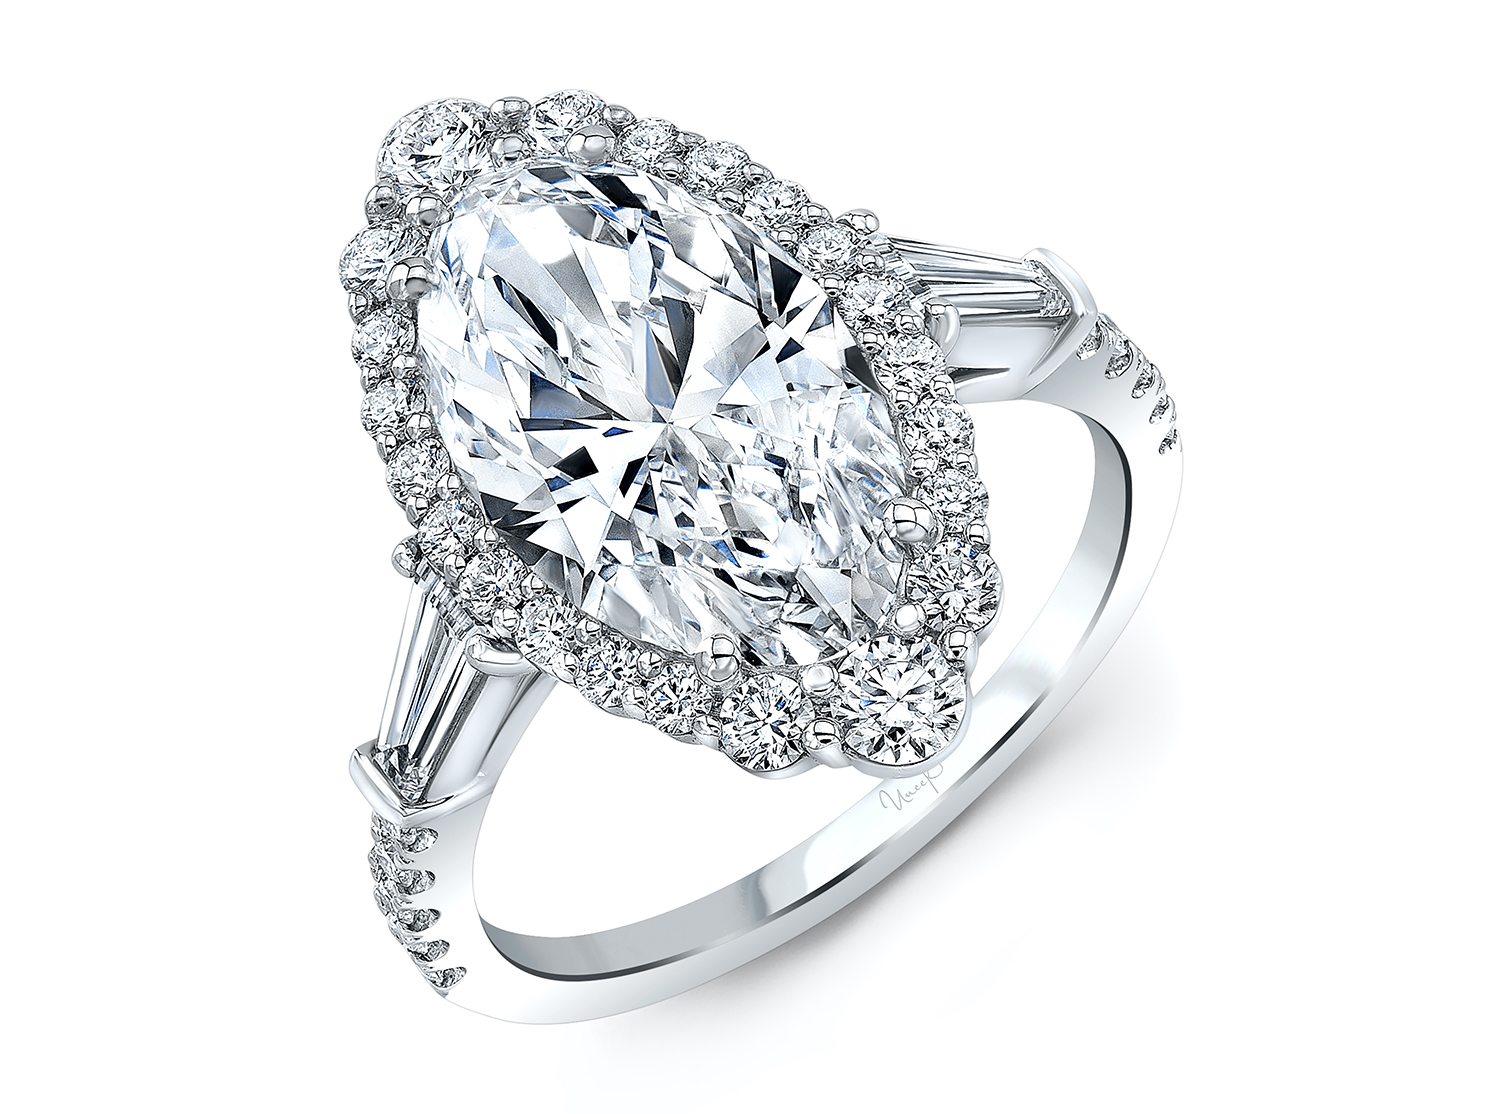 INSTORE Design Awards 2022 – Engagement/Wedding Jewelry Over $5,000